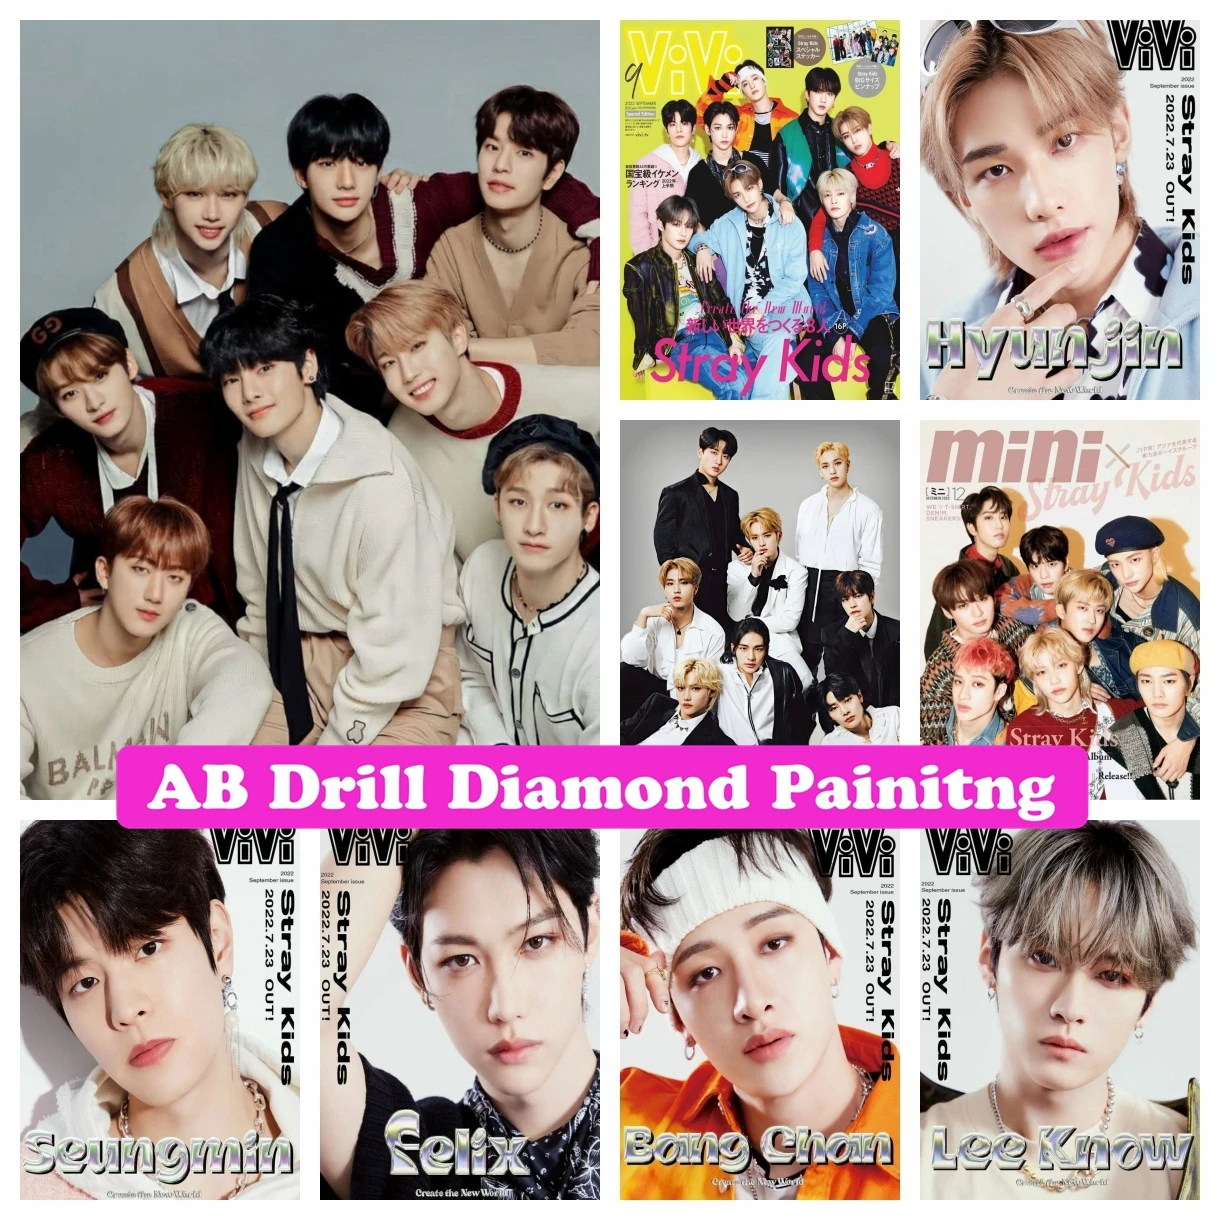 

Stray Kids 5D DIY AB Drills Diamond Painting Mosaic Kpop Idol Cross Stitch Embroidery Rhinestones Fans Collection Girls Gifts